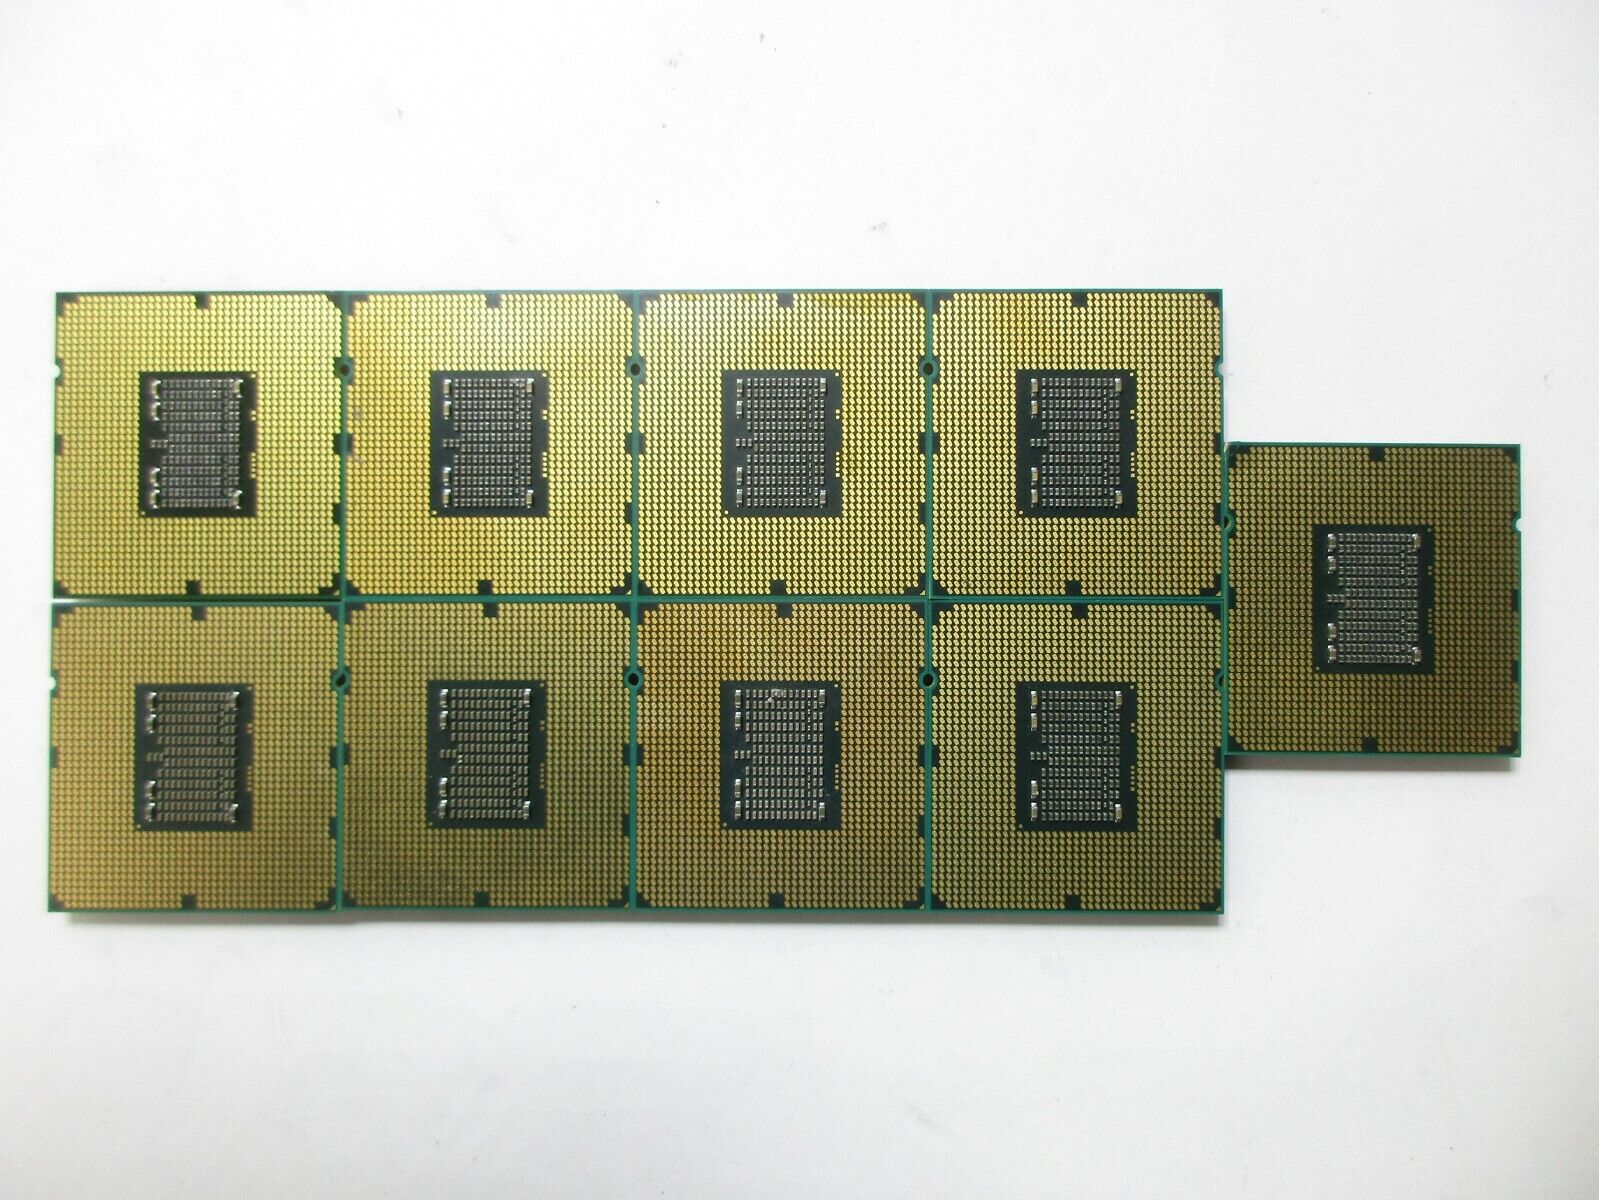 QTY-9 Intel Xeon E5620 2.4GHz (2.6GHz Turbo) CPU SLBV4 12MB Cache LGA1366 T9-D10 Intel SLBV4, E5620 - фотография #4